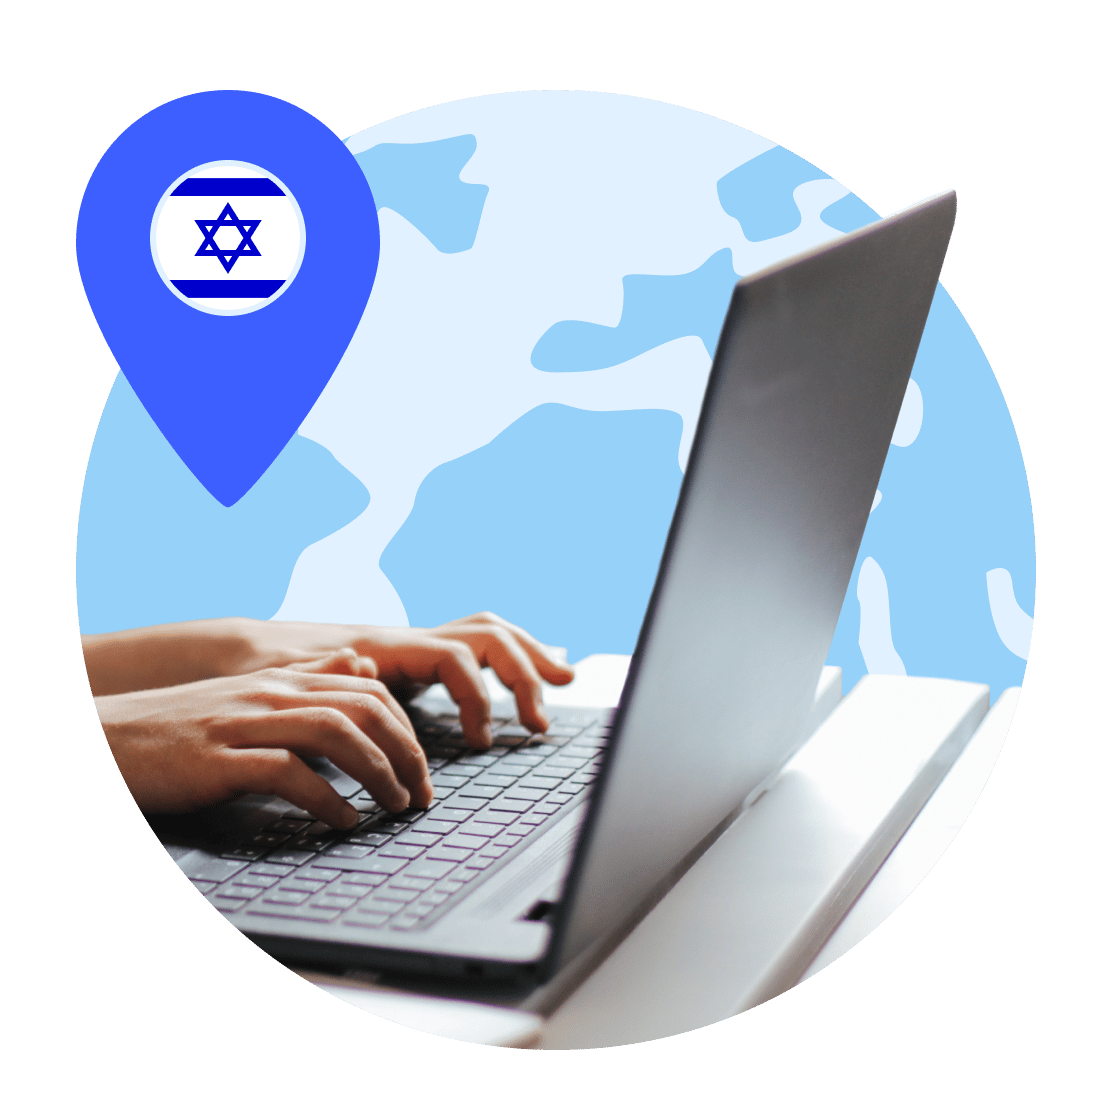 hero planet earth worldwide laptop servers md israel